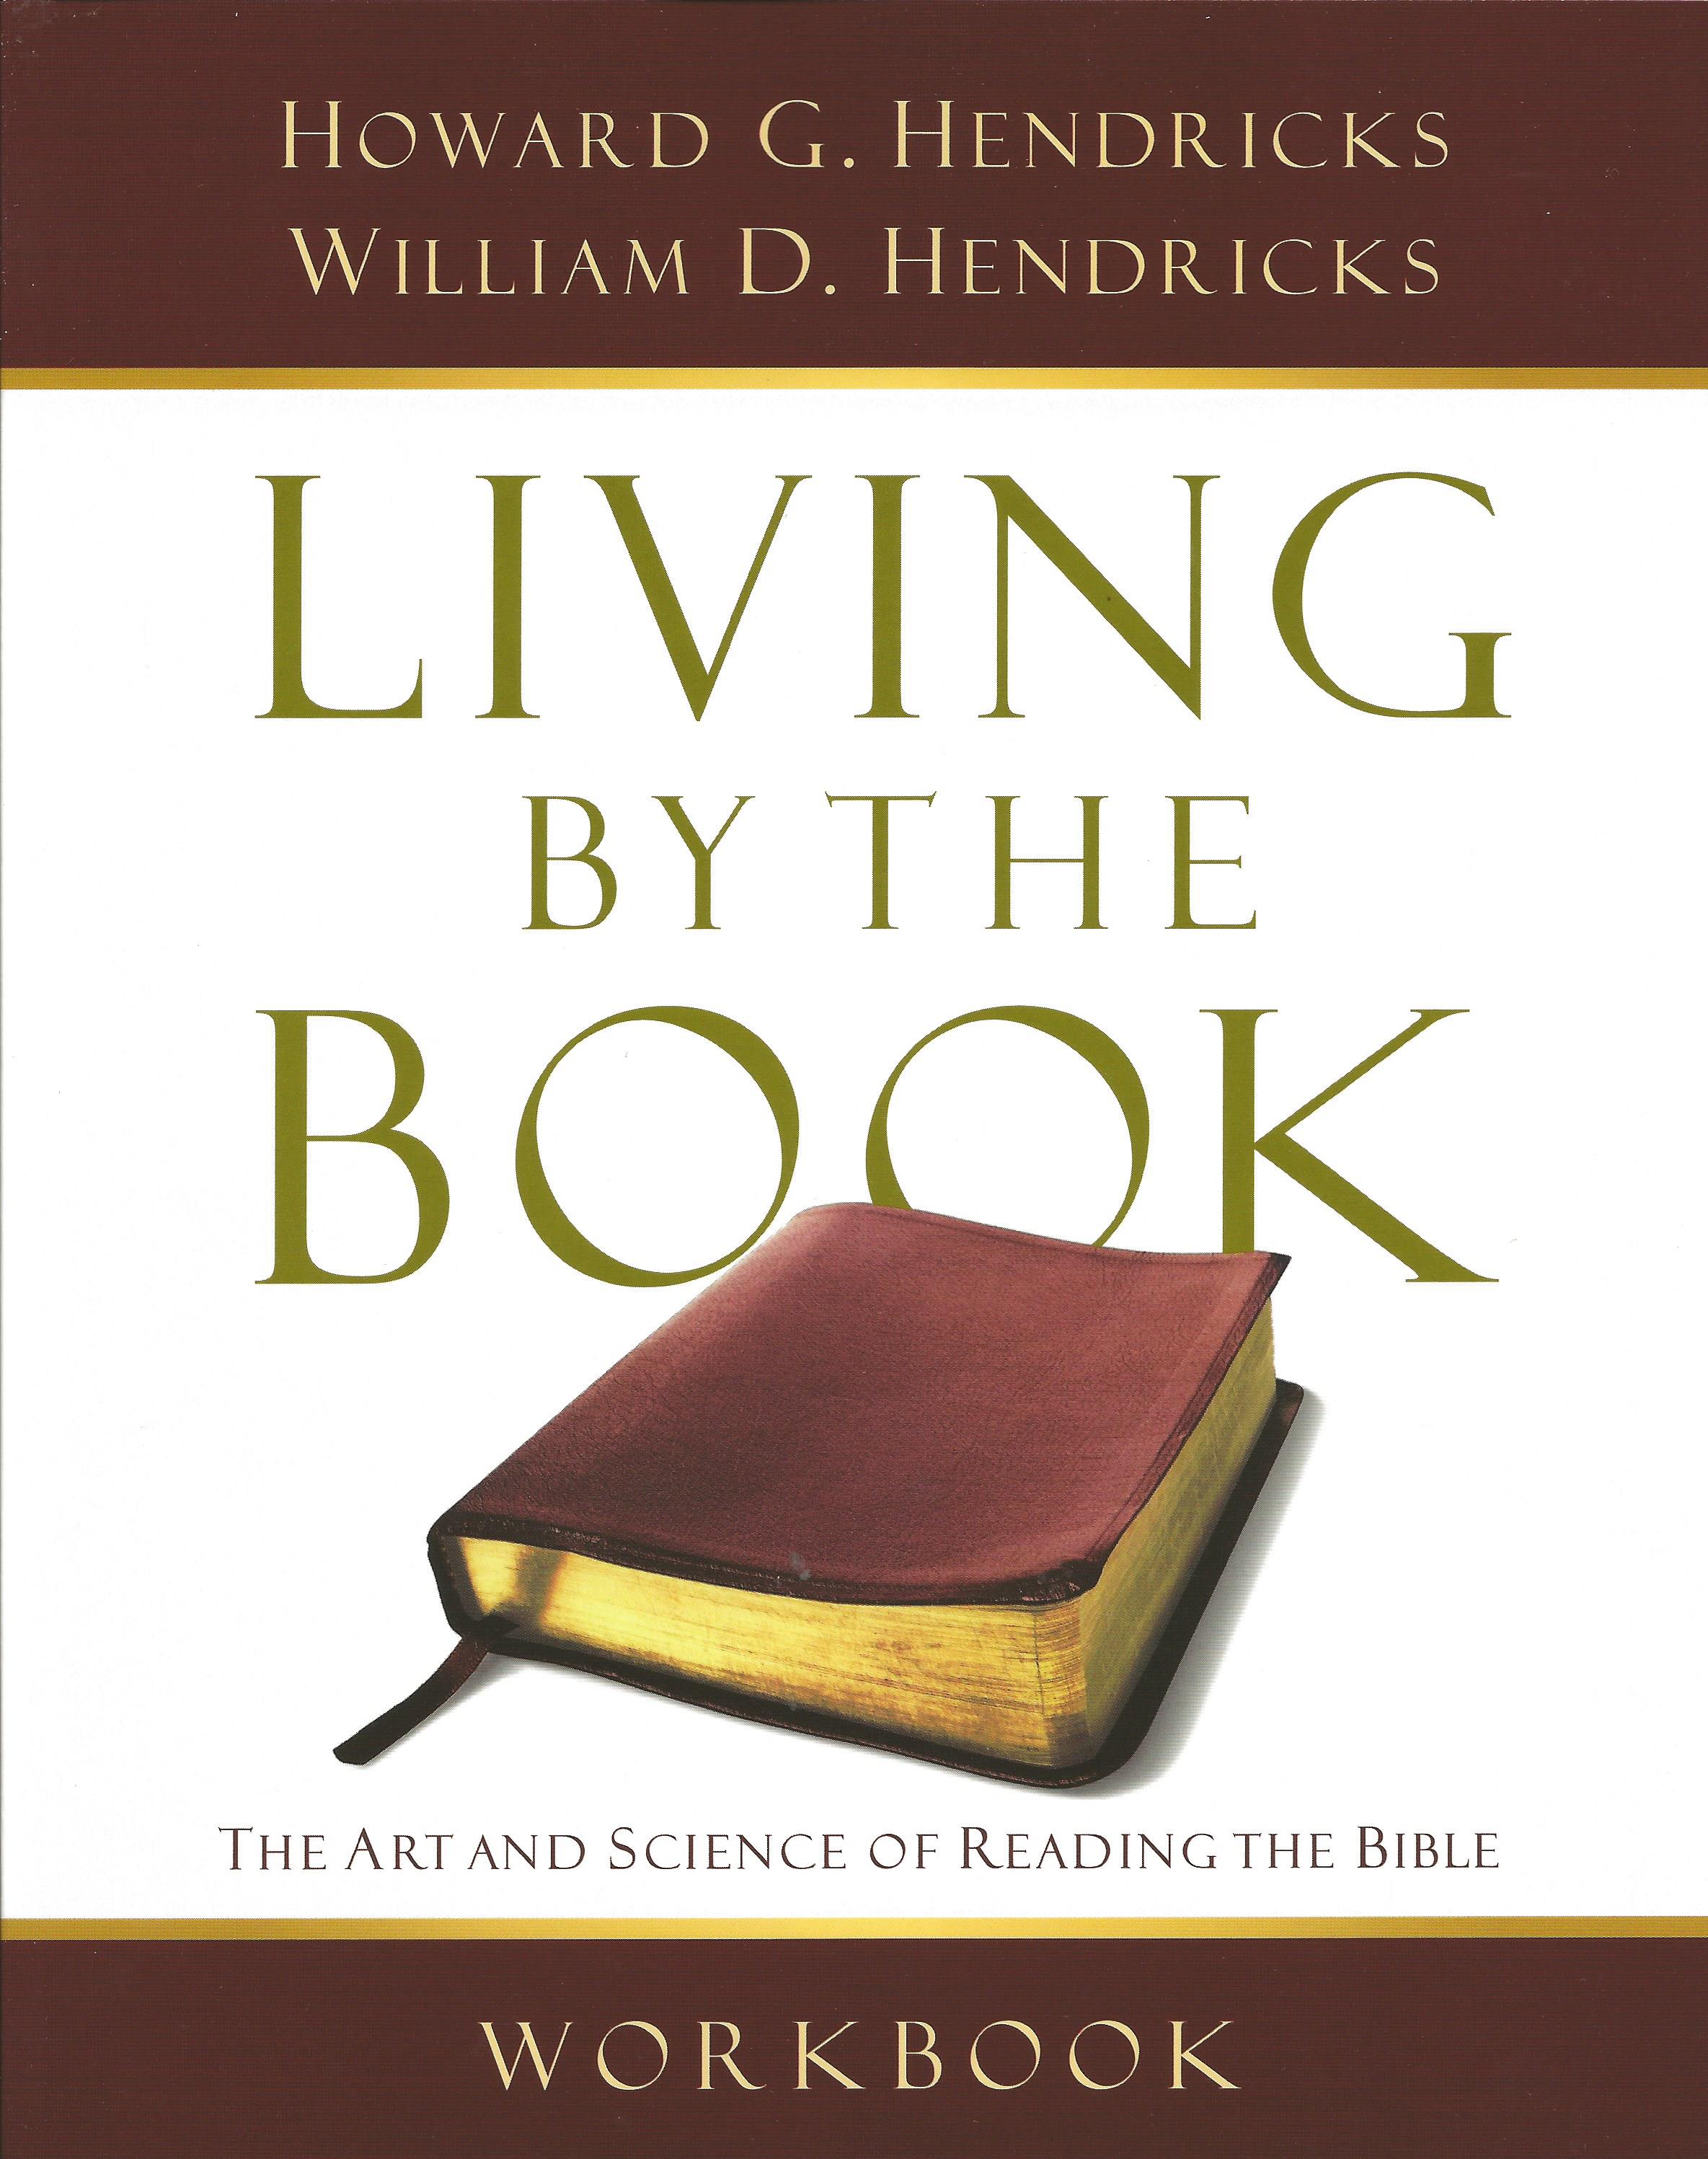 LIVING BY THE BOOK WORKBOOK HOWARD G. HENDRICKS, WILLIAM D.